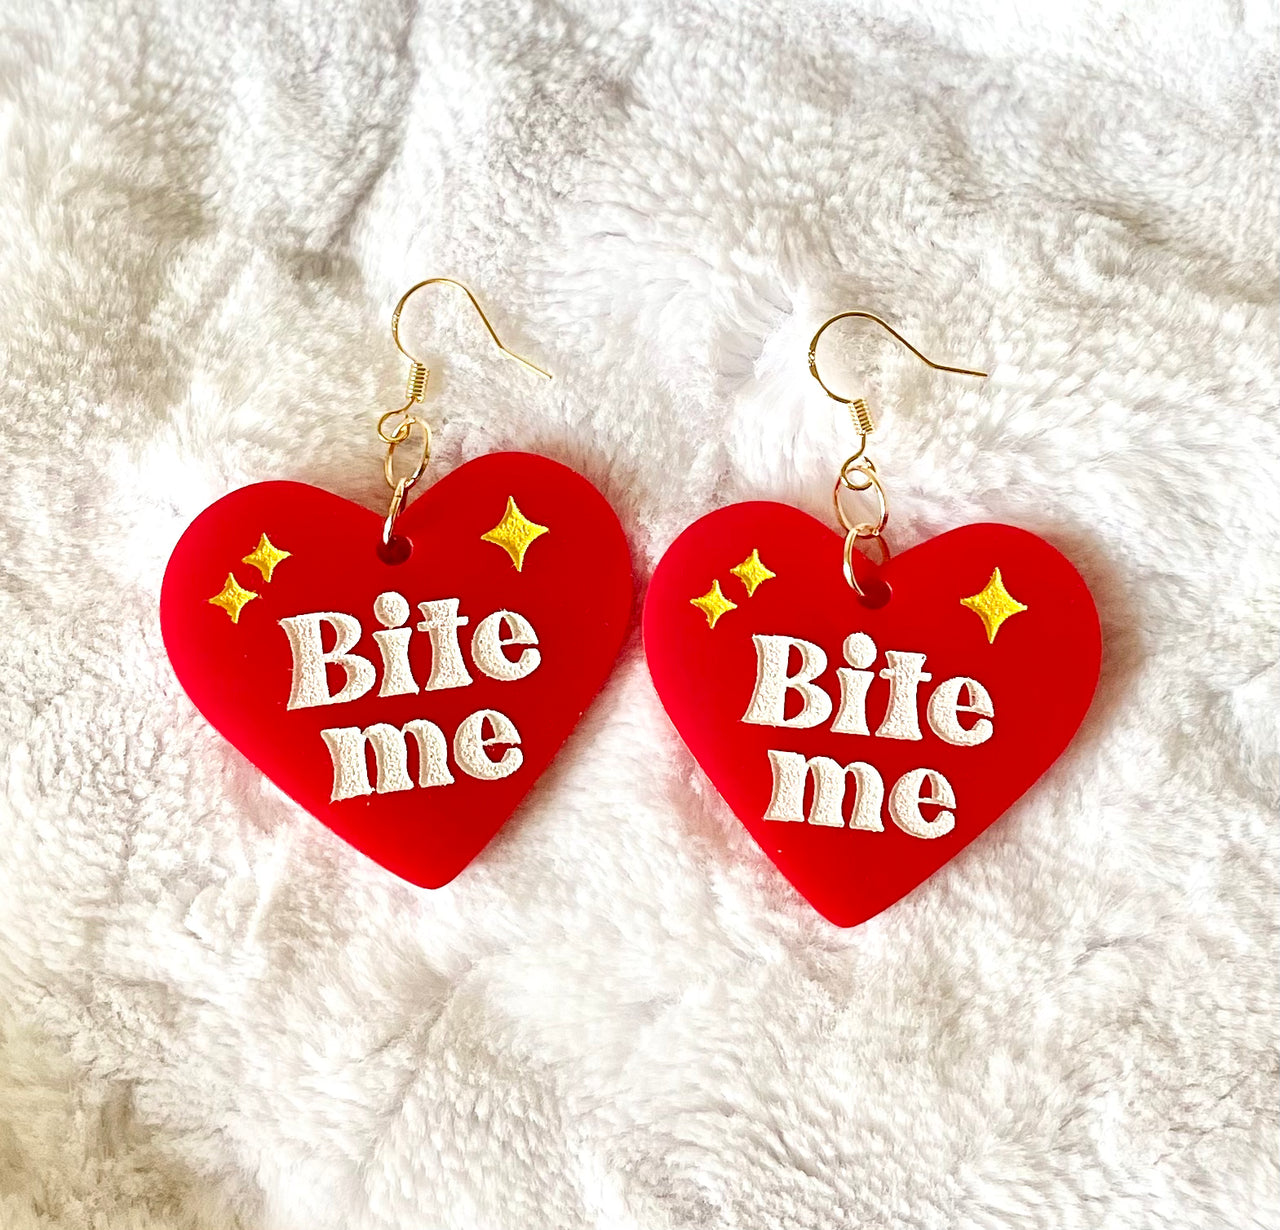 Bite me heart earrings